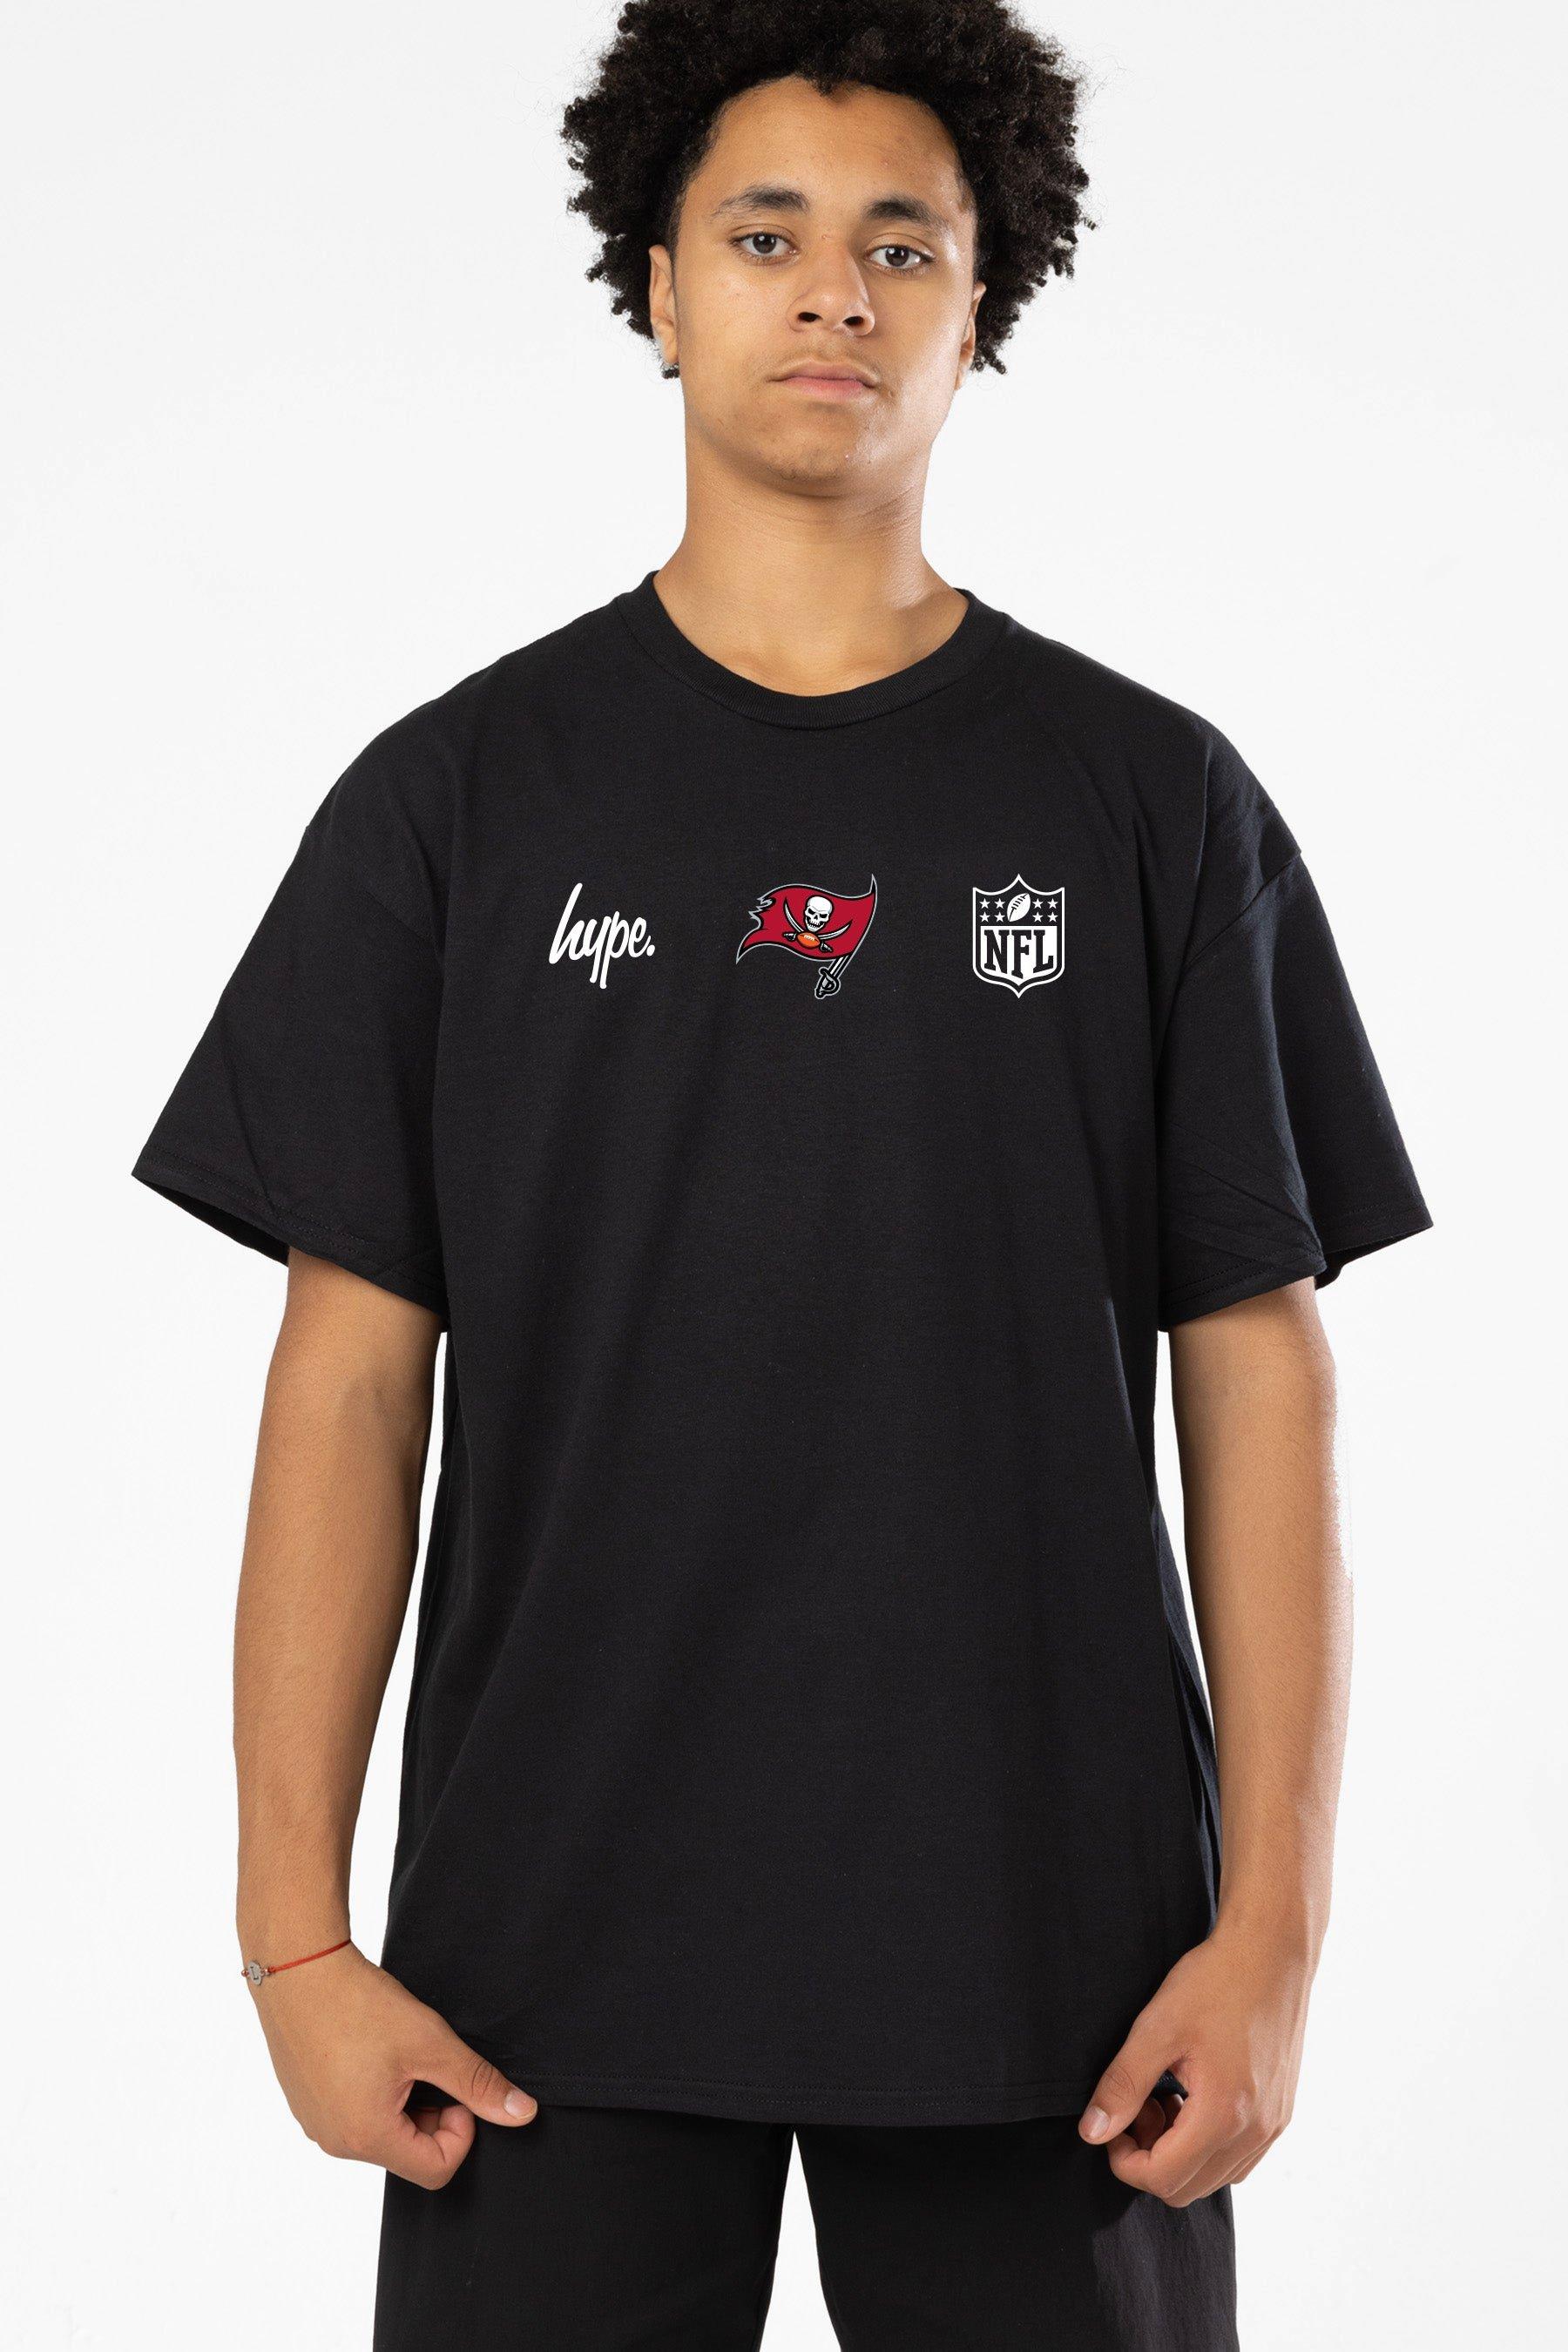 NFL X Tampa Bay Buccaneers T-Shirt